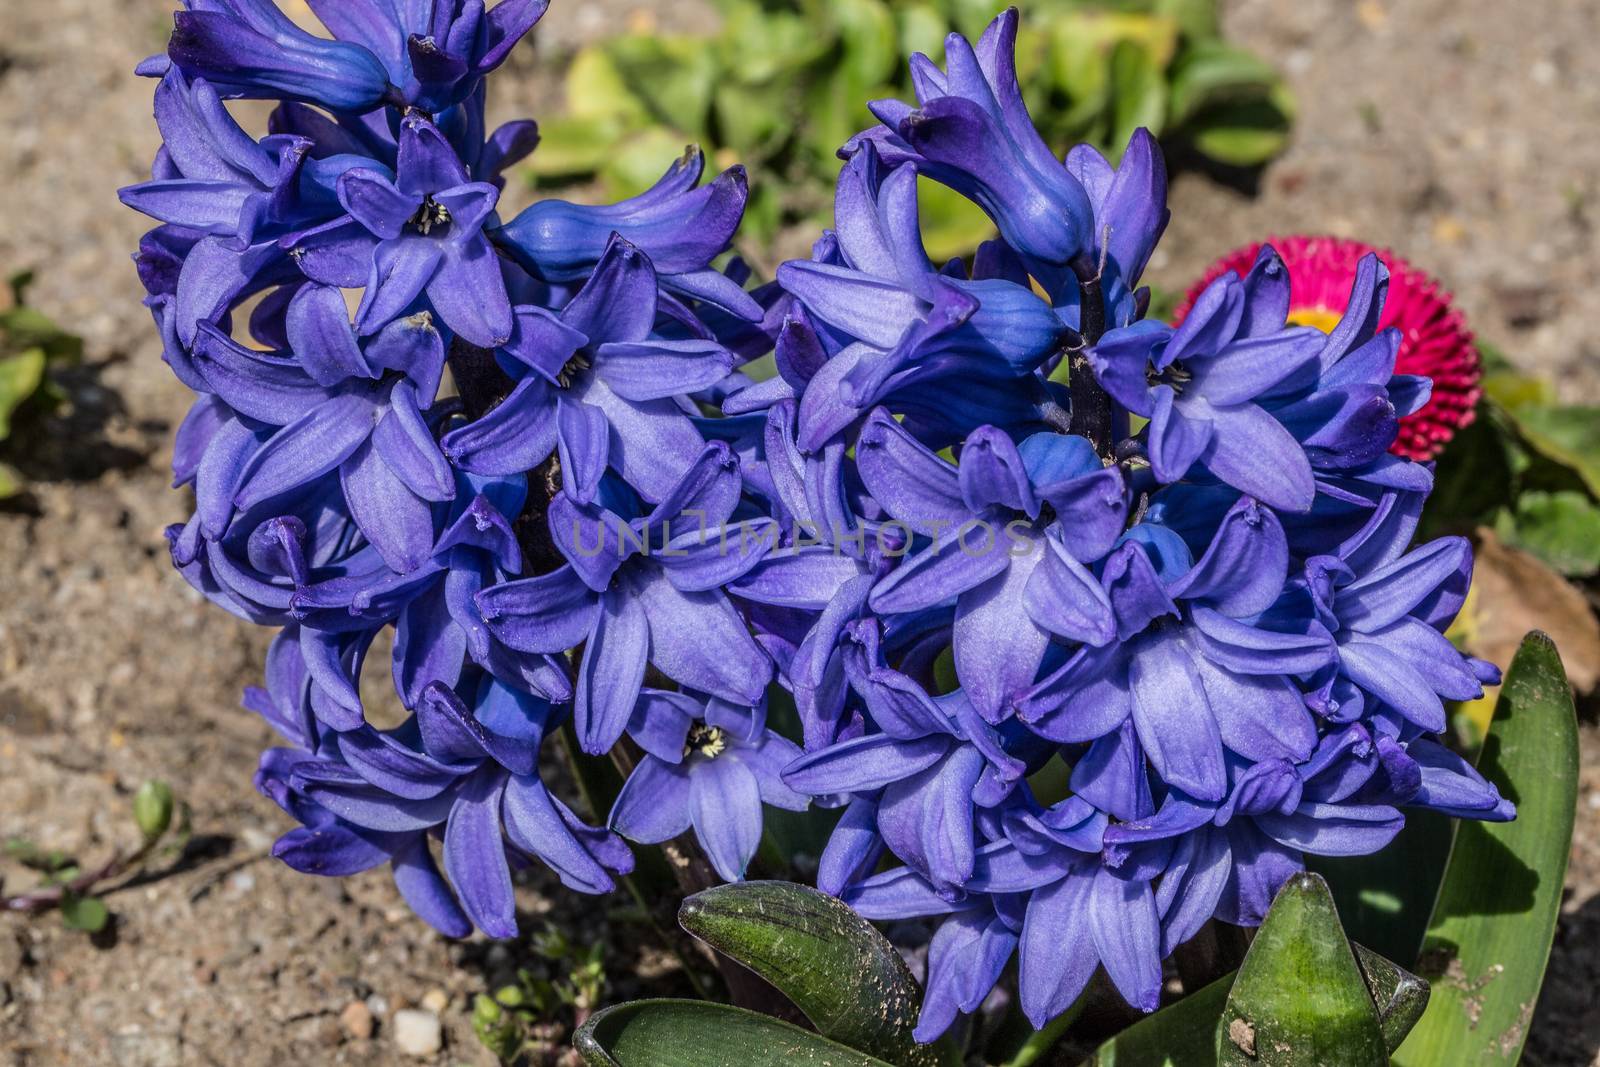 blue hyacinths in flower bed by Dr-Lange